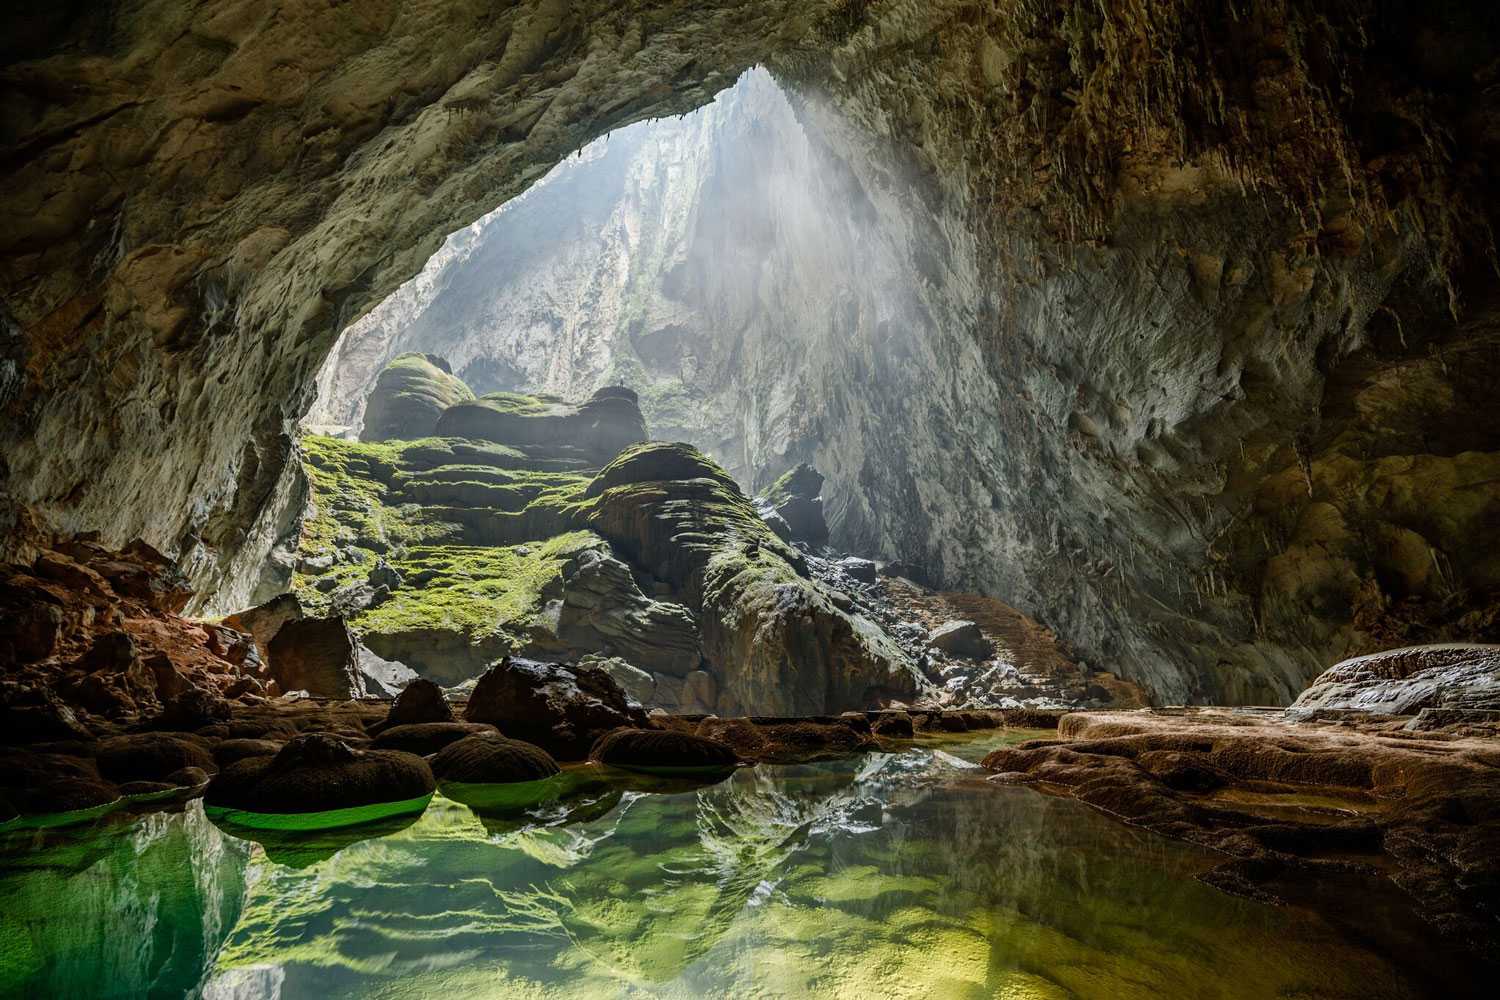 oxalis cave tours